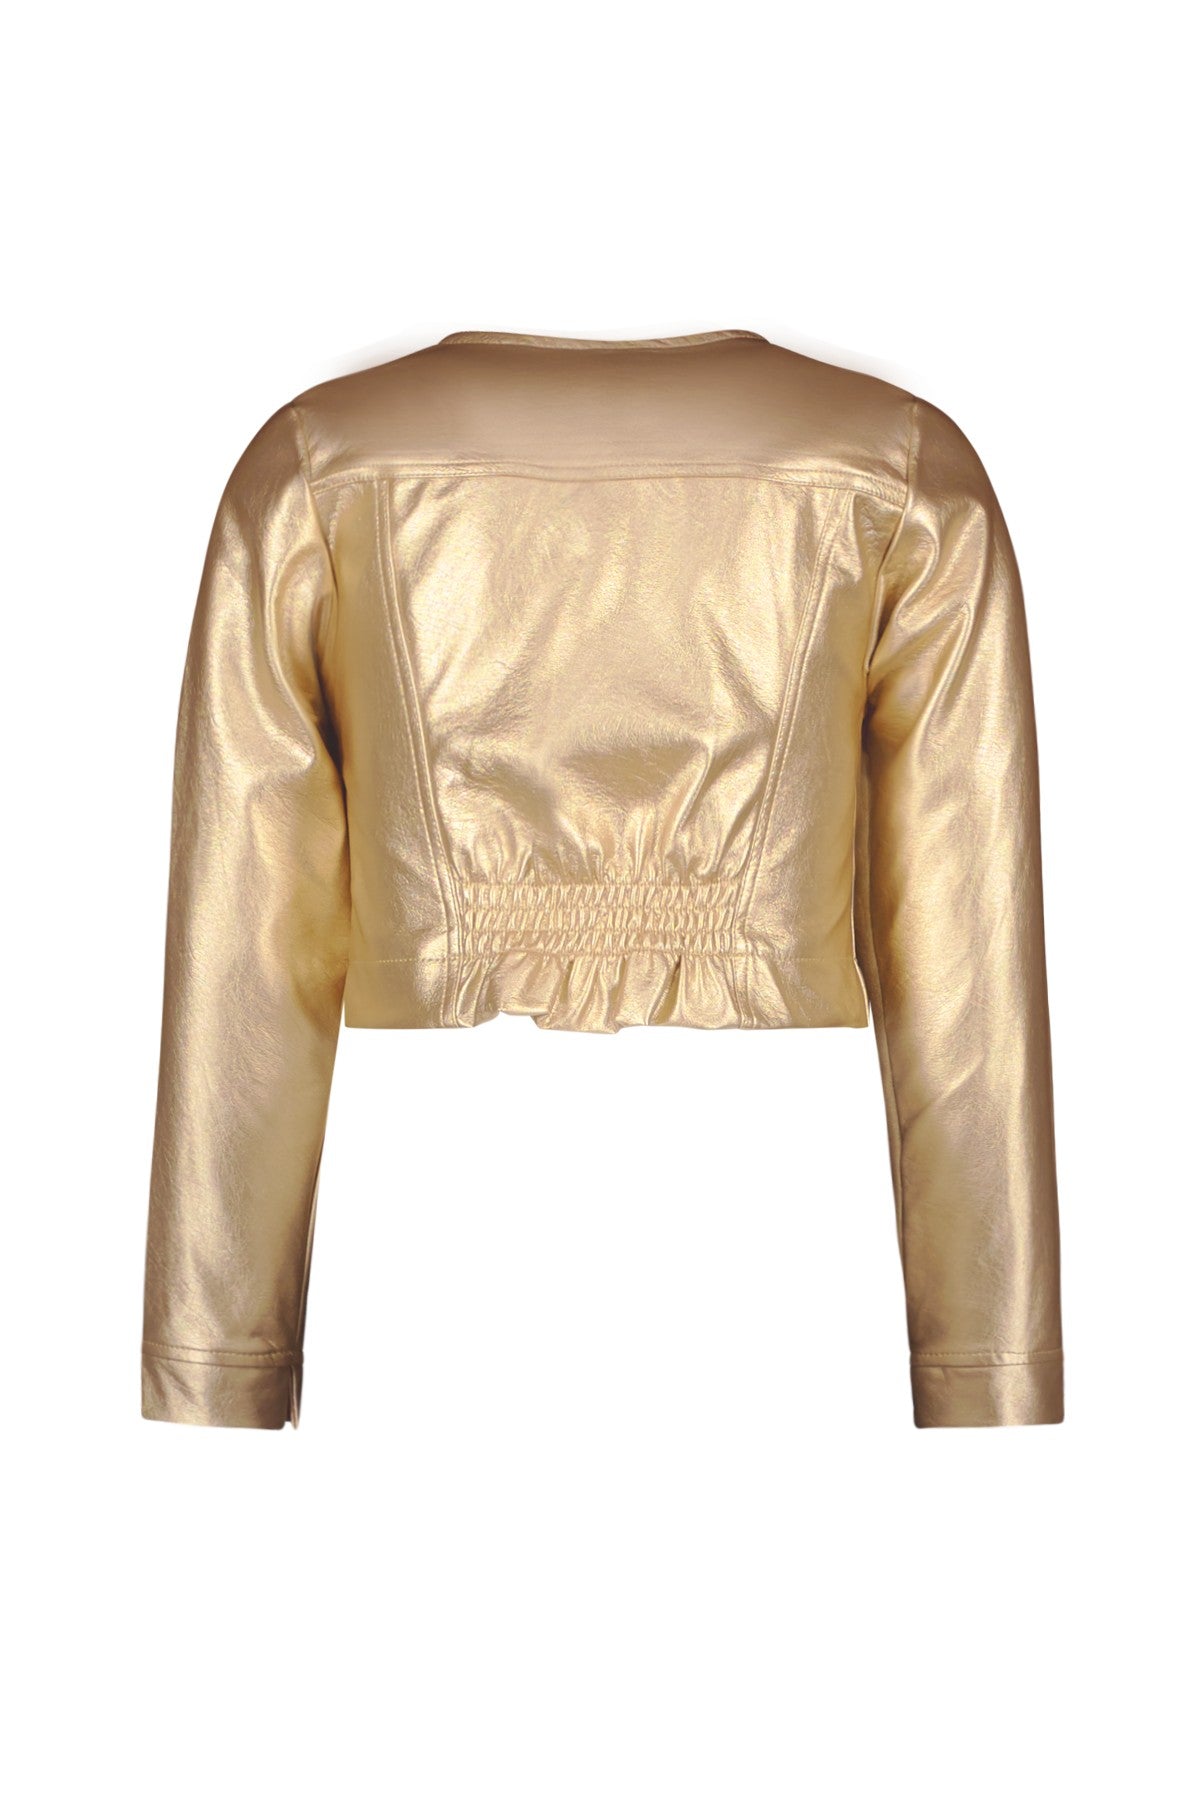 Meisjes Imi Leather Jacket No Collar van Like Flo in de kleur Gold in maat 140.